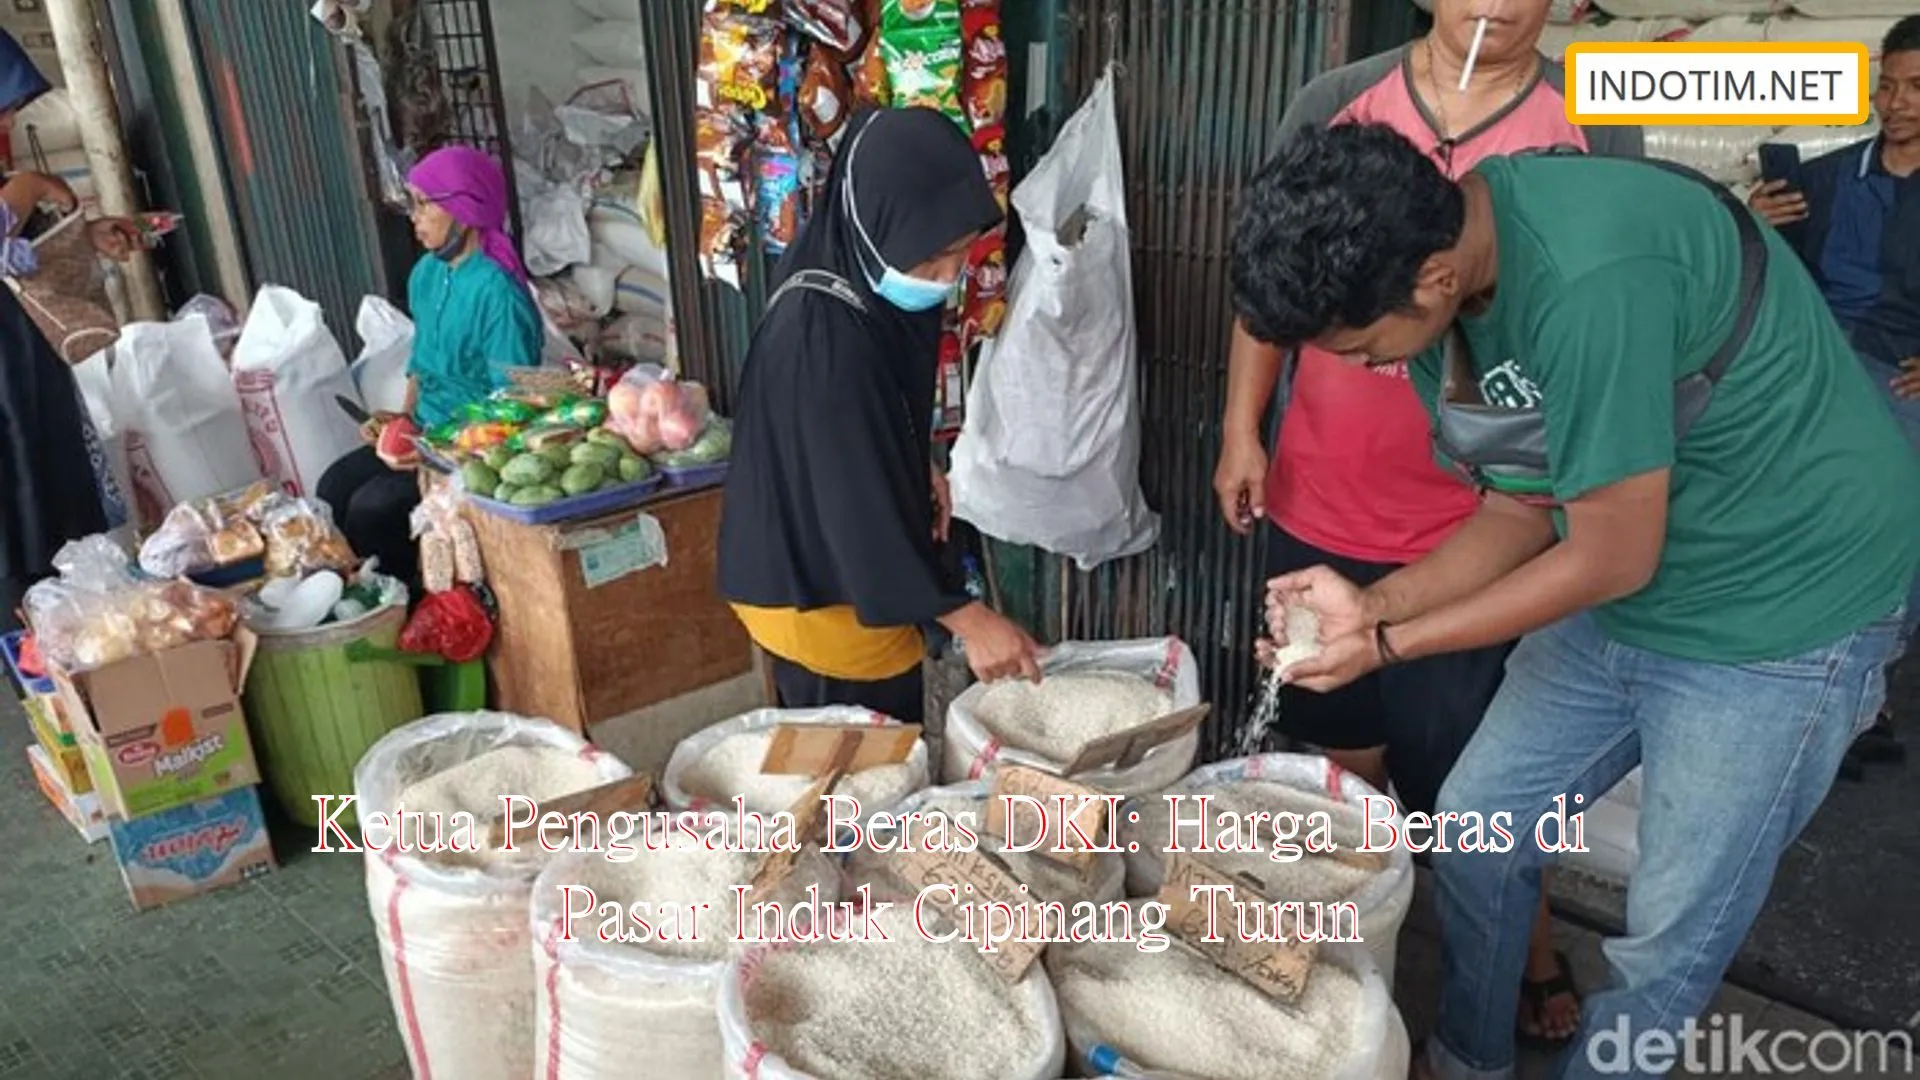 Ketua Pengusaha Beras DKI: Harga Beras di Pasar Induk Cipinang Turun